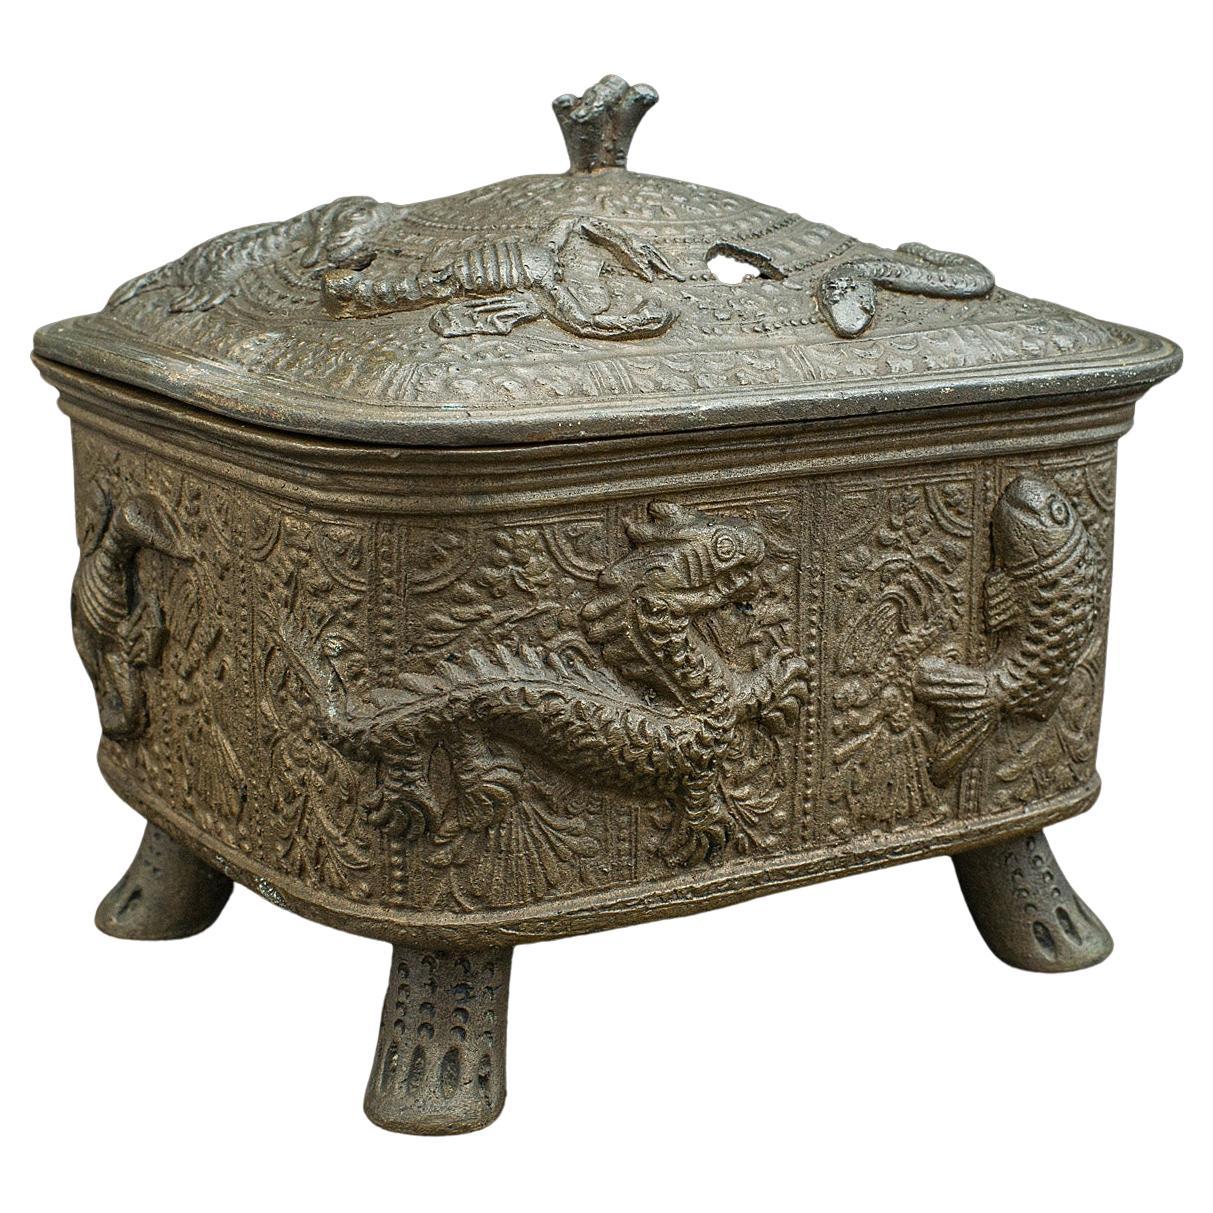 Antique Decorative Censer, Chinese, Bronze, Incense Burner, Victorian, C.1850 For Sale